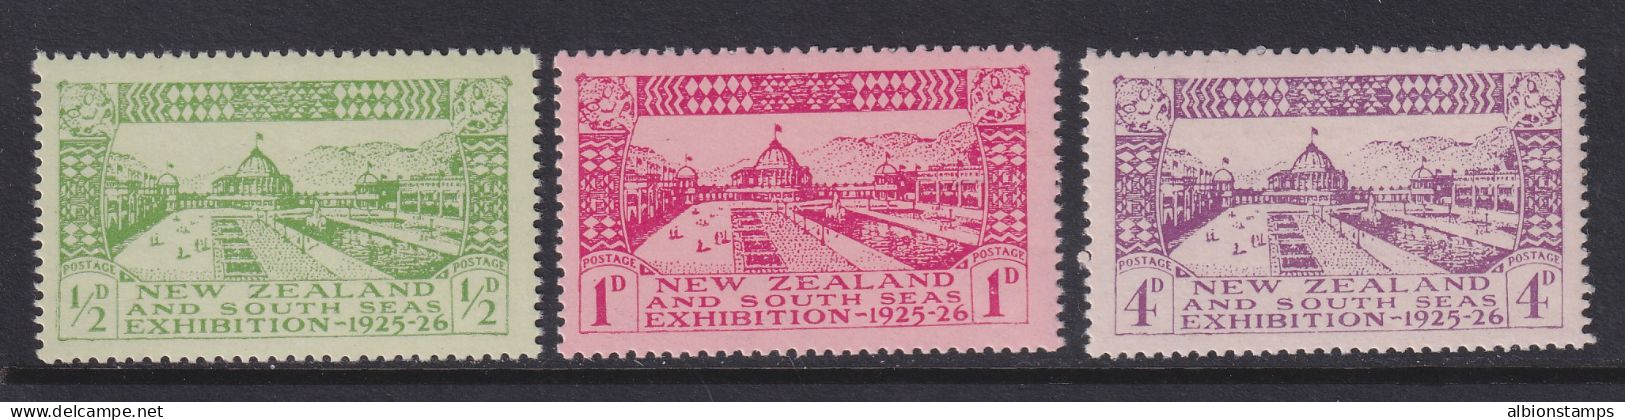 New Zealand, Scott 179-181 (SG 463-465), MNH - Unused Stamps